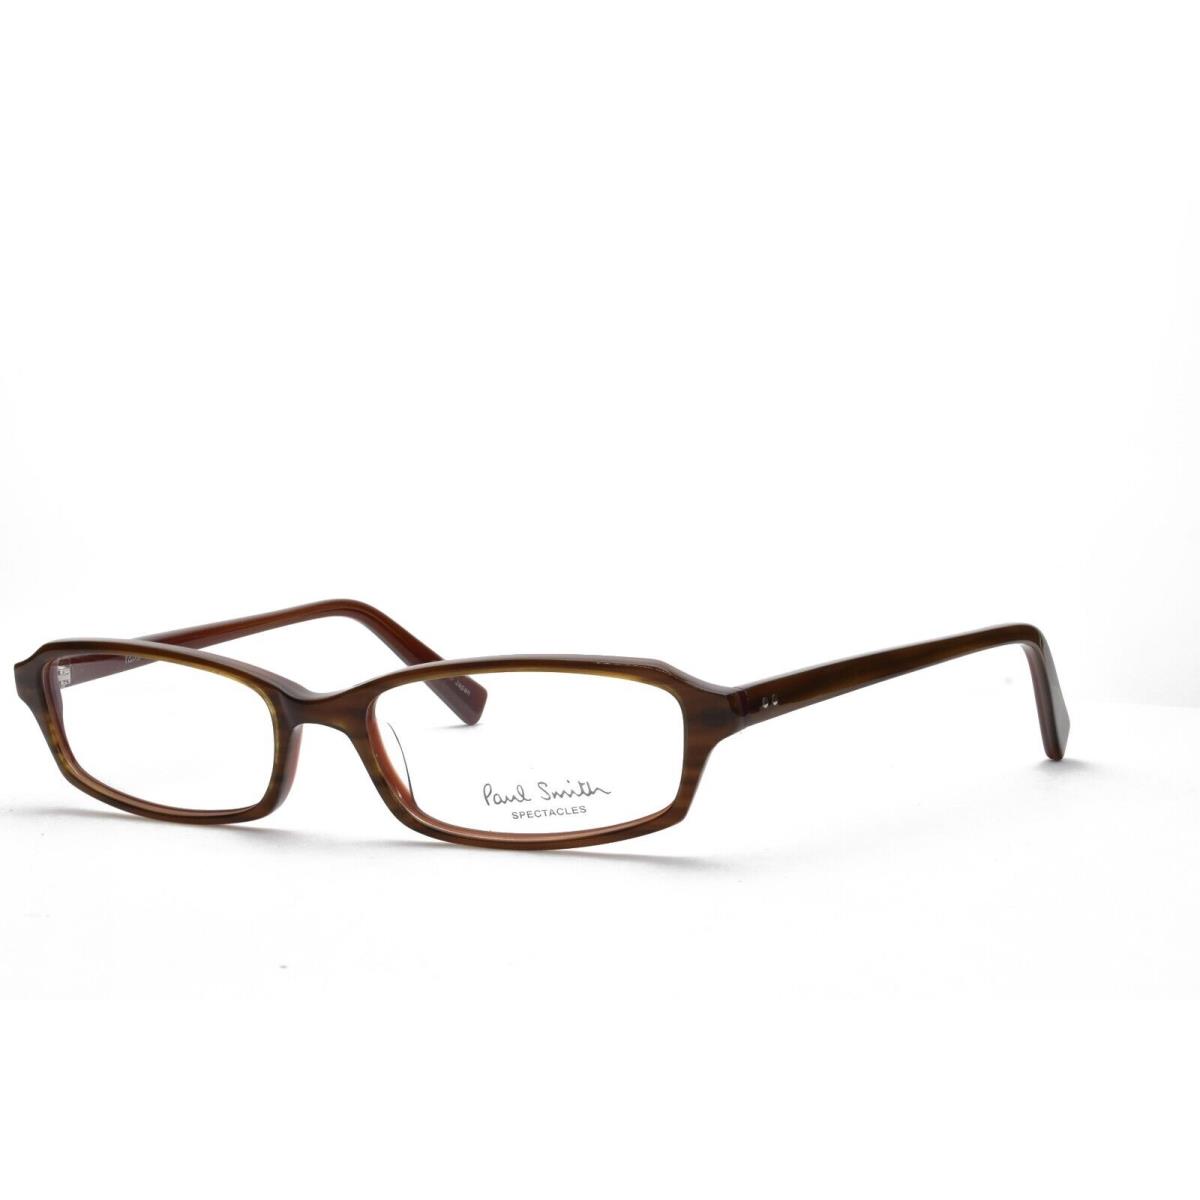 Paul Smith 276 TC 52-16-140 Brown Vtg Vintage Eyeglasses Frames